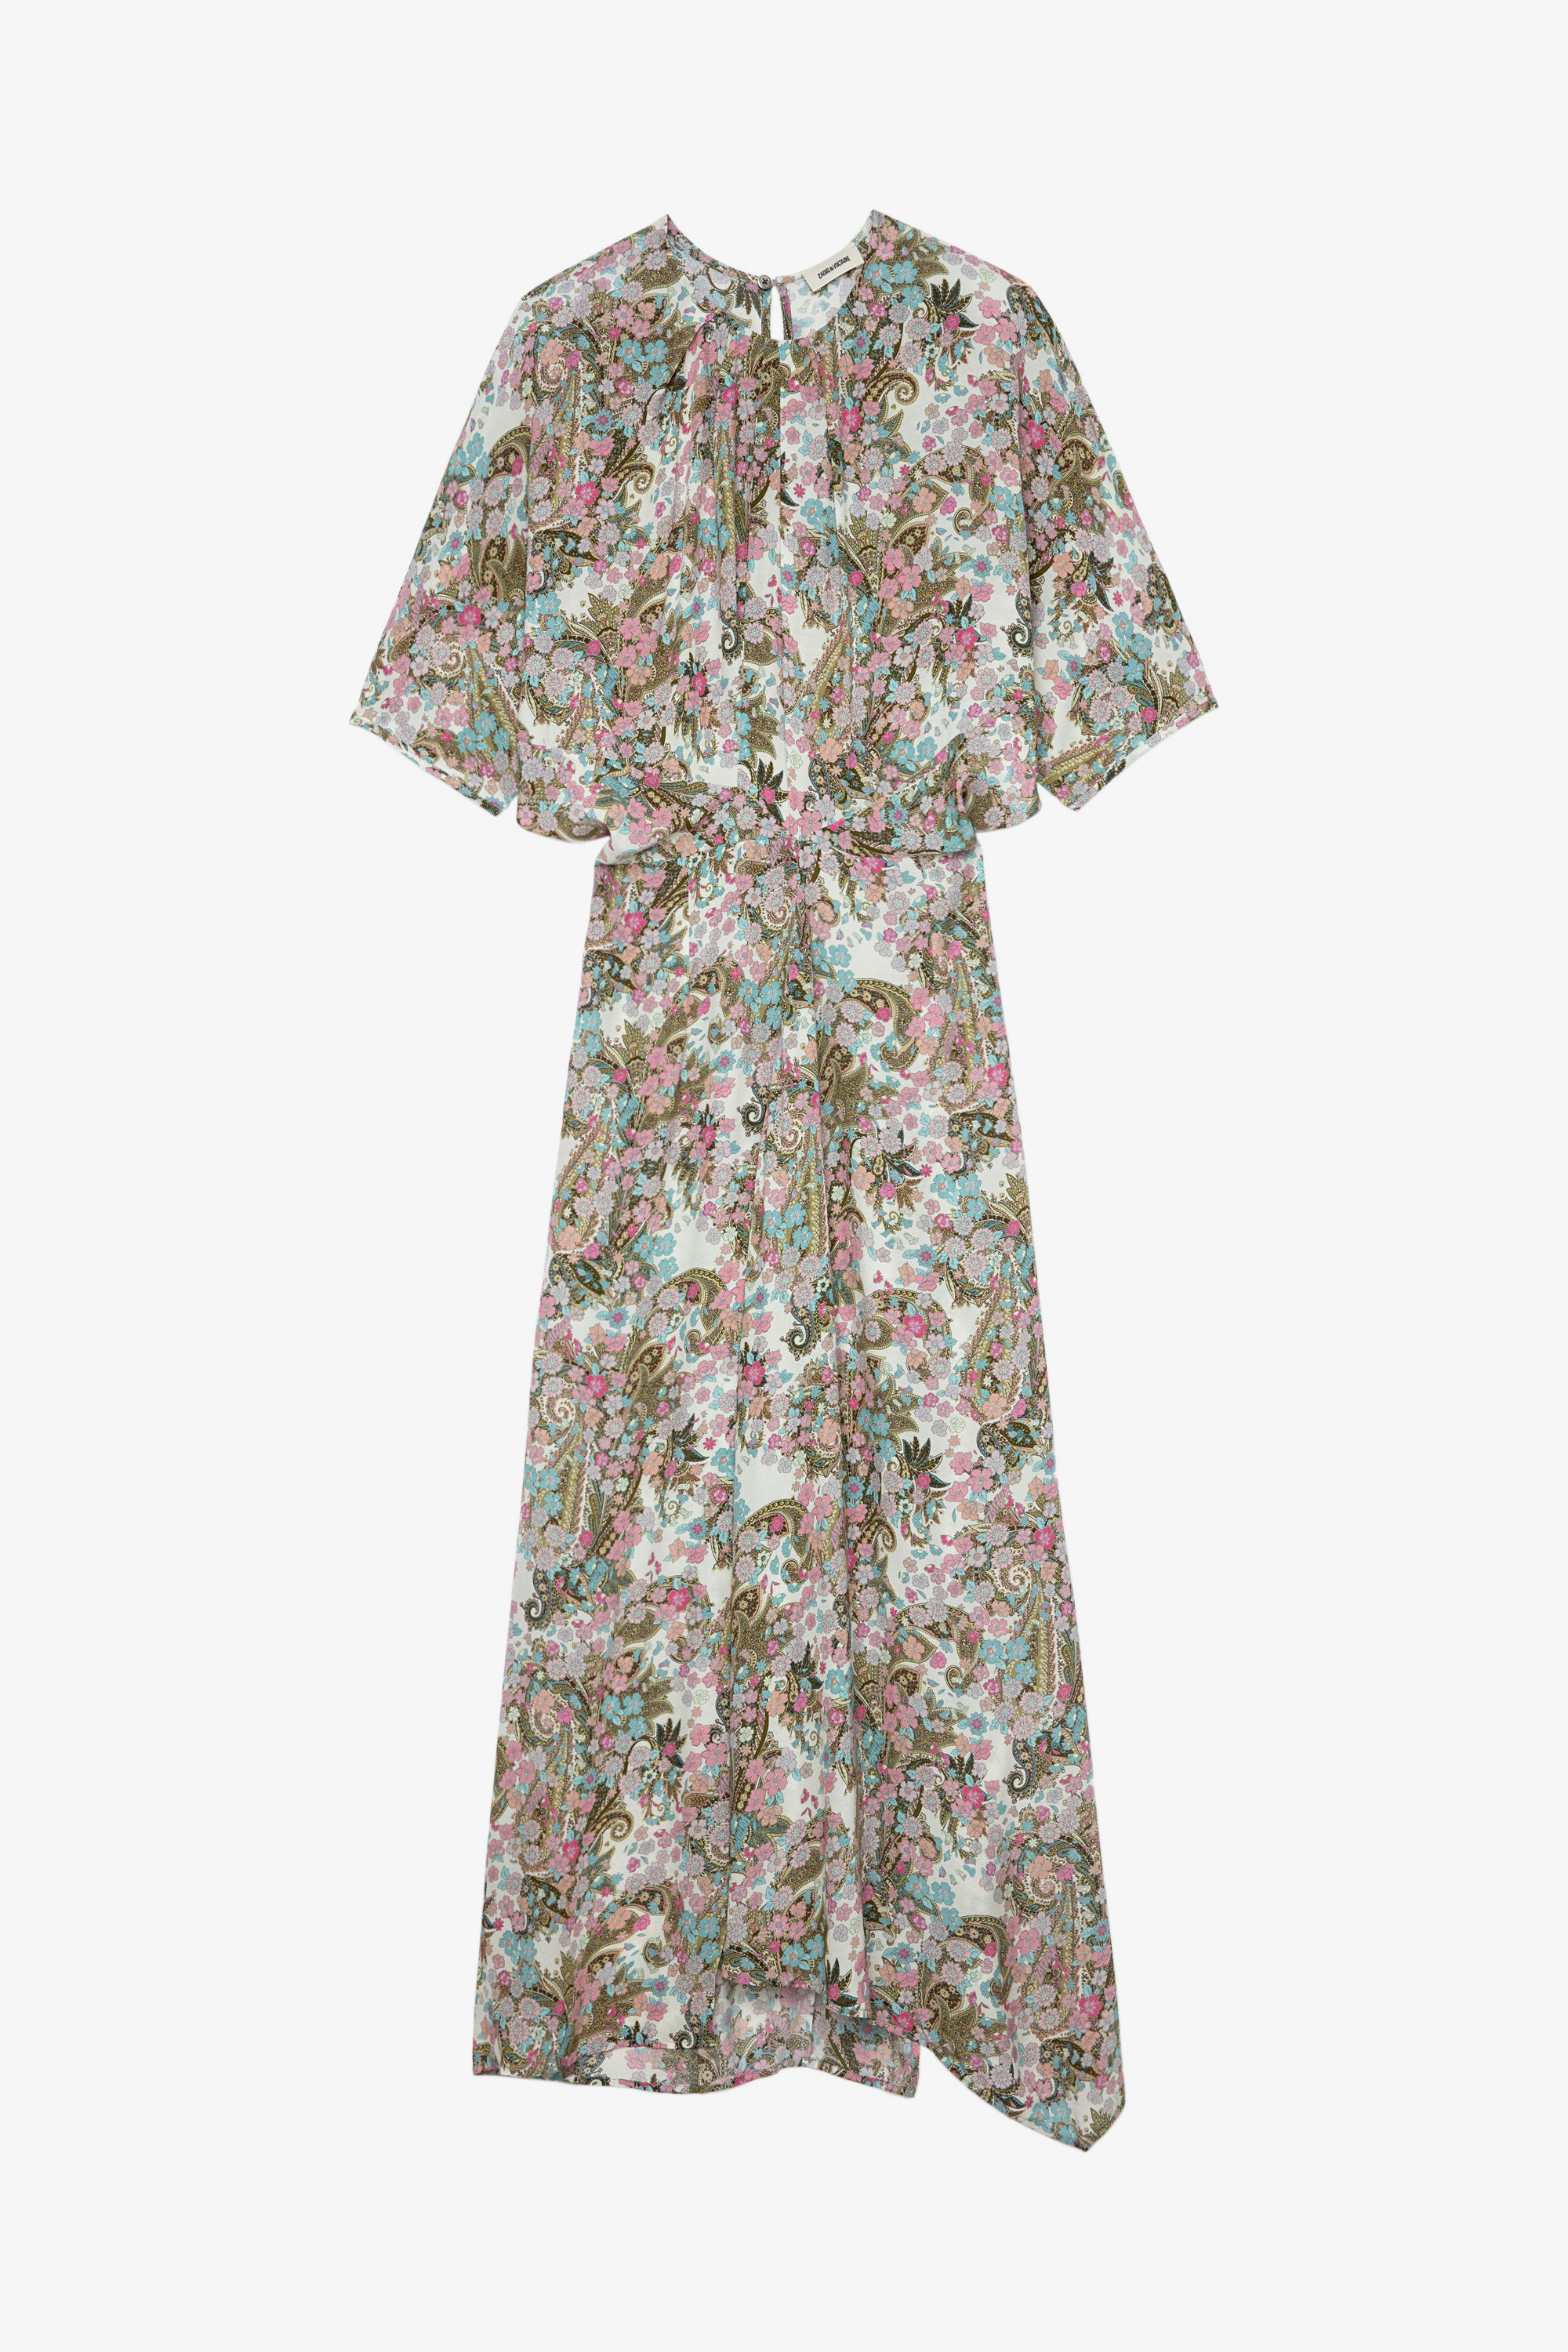 Ritan Dress Women's long gathered dress, tied at the waist, mauve floral print and an asymmetrical skirt